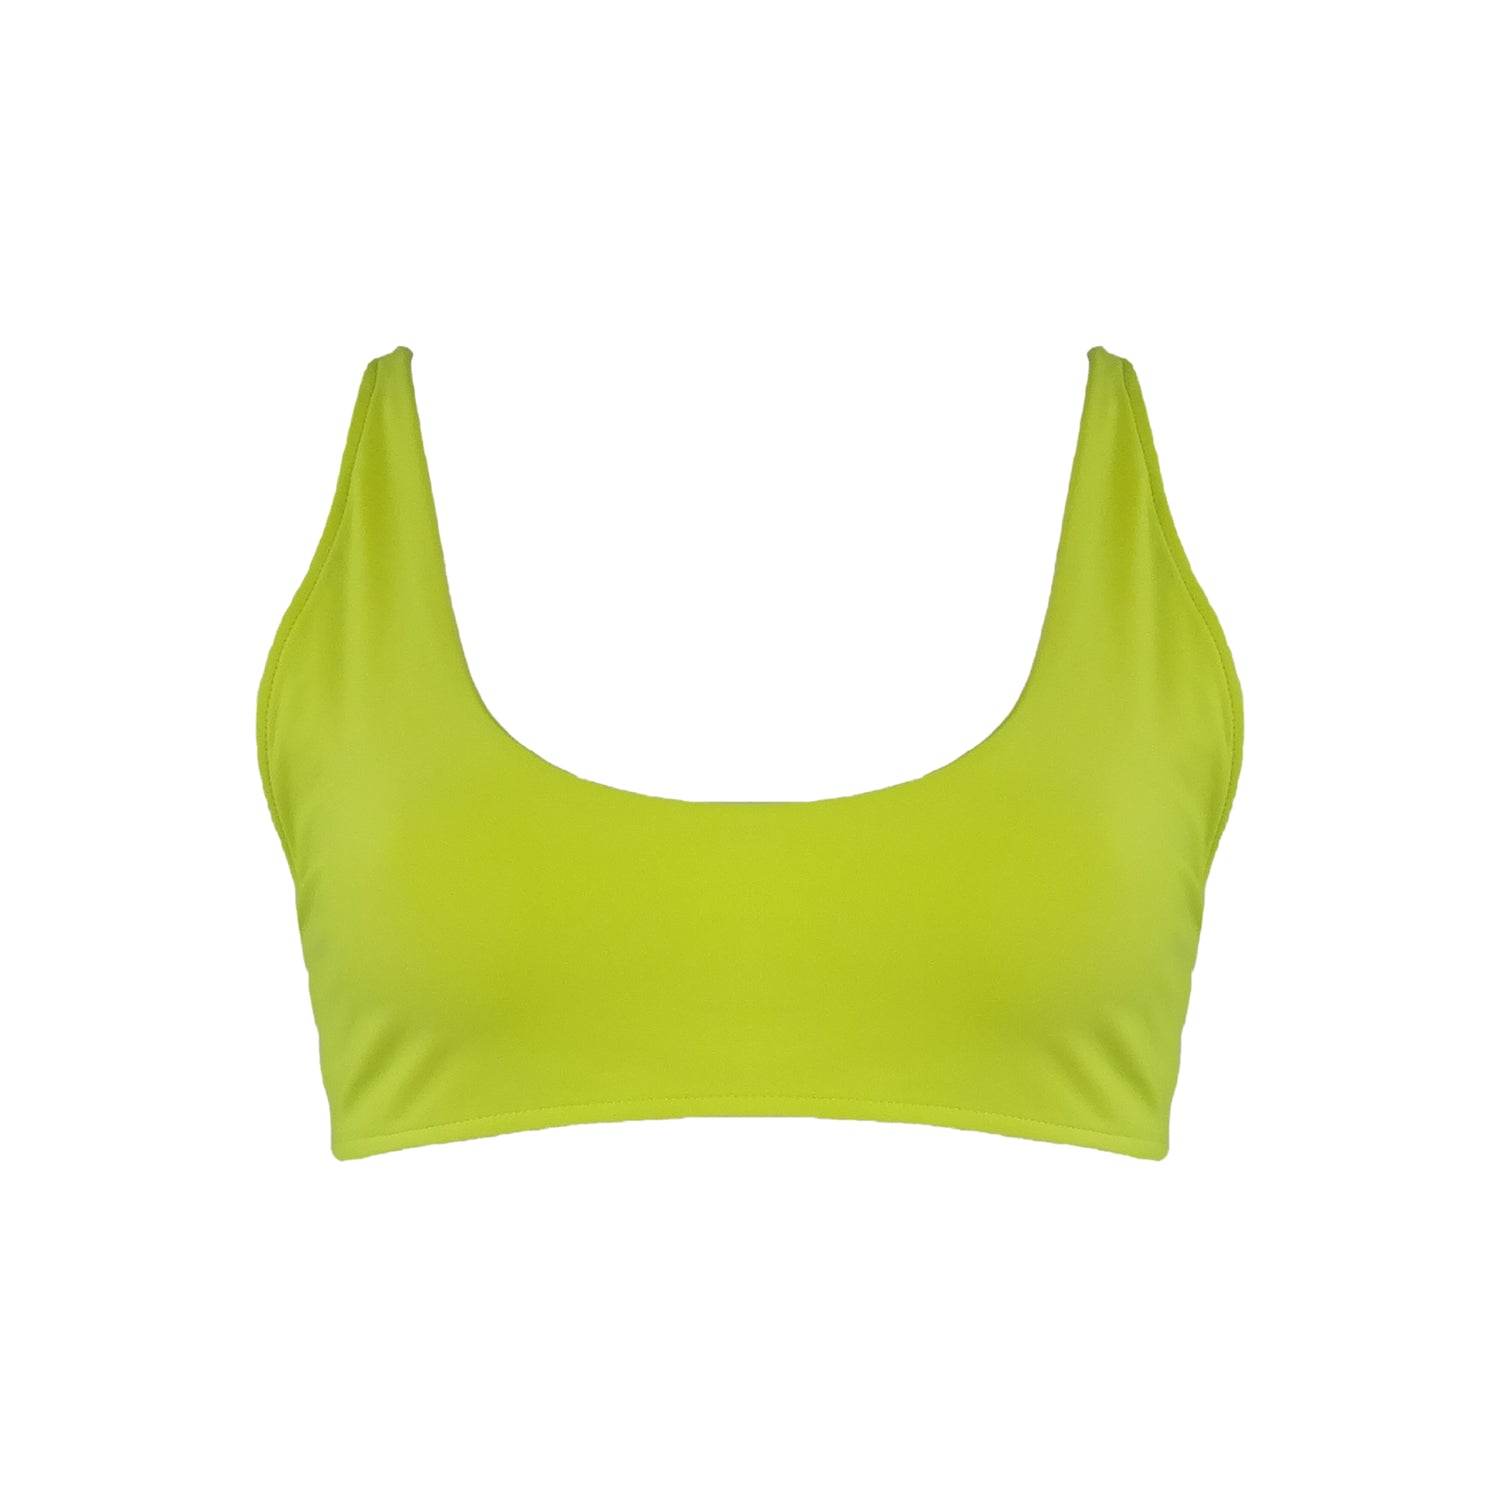 Neon yellow Scoop neck bralette style bikini top.